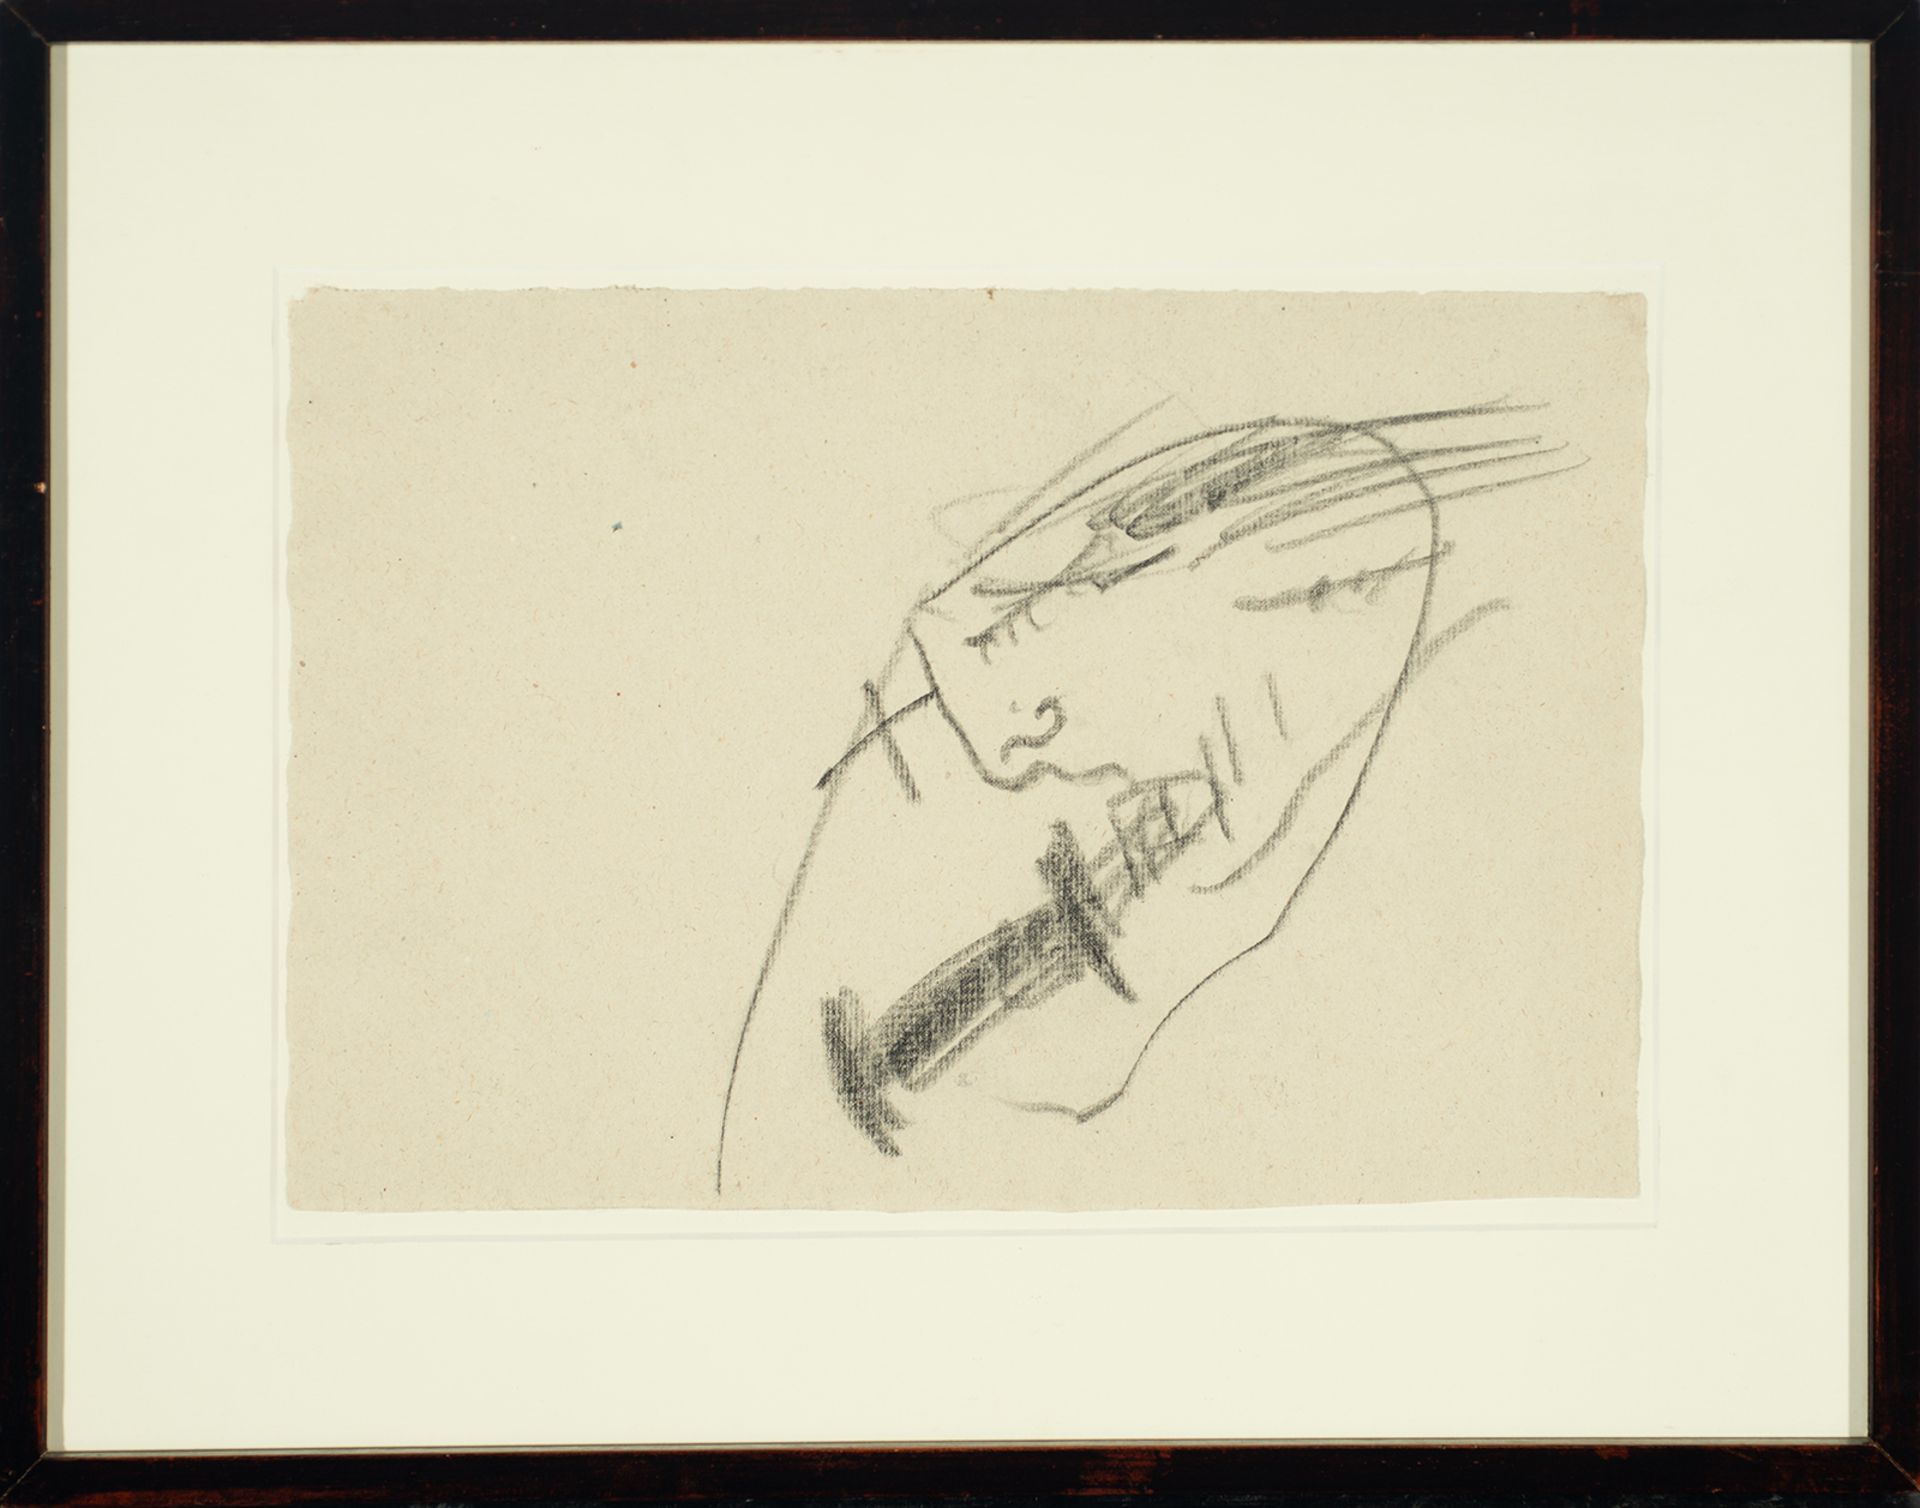 Antoni Tàpies (1923 - 2012), "Untitled", pencil on brown paper